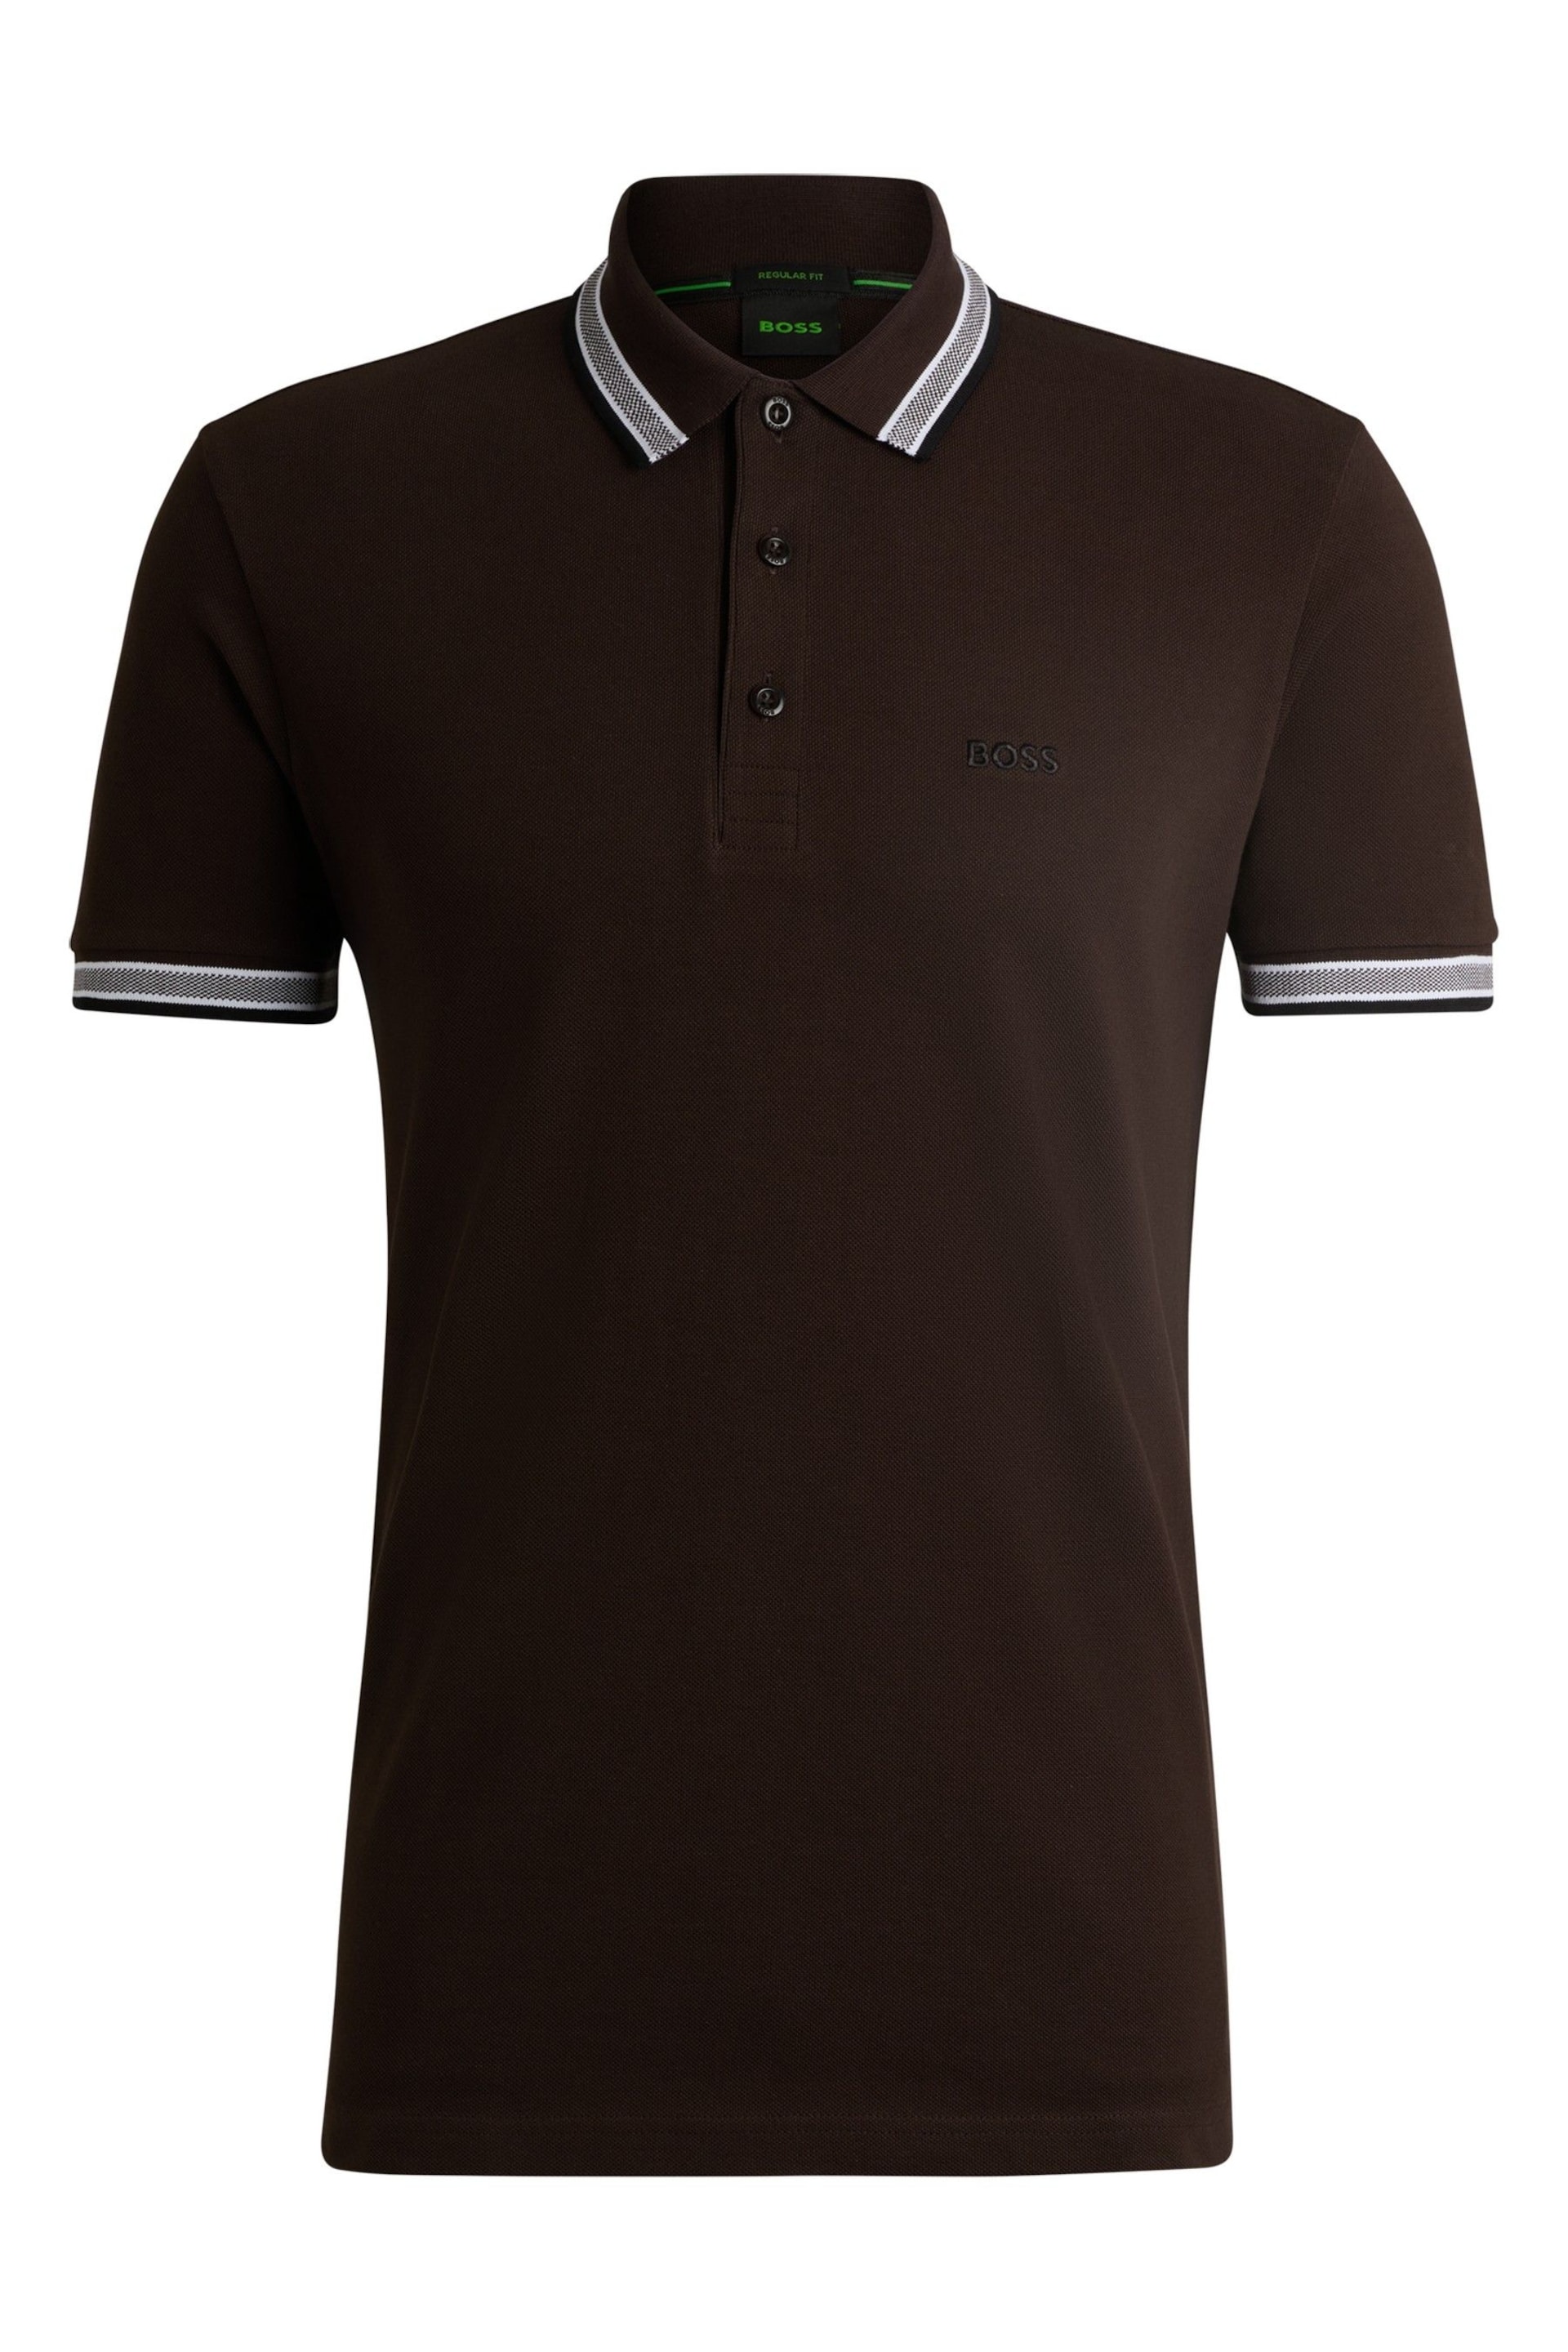 BOSS Brown Paddy Polo Shirt - Image 4 of 4